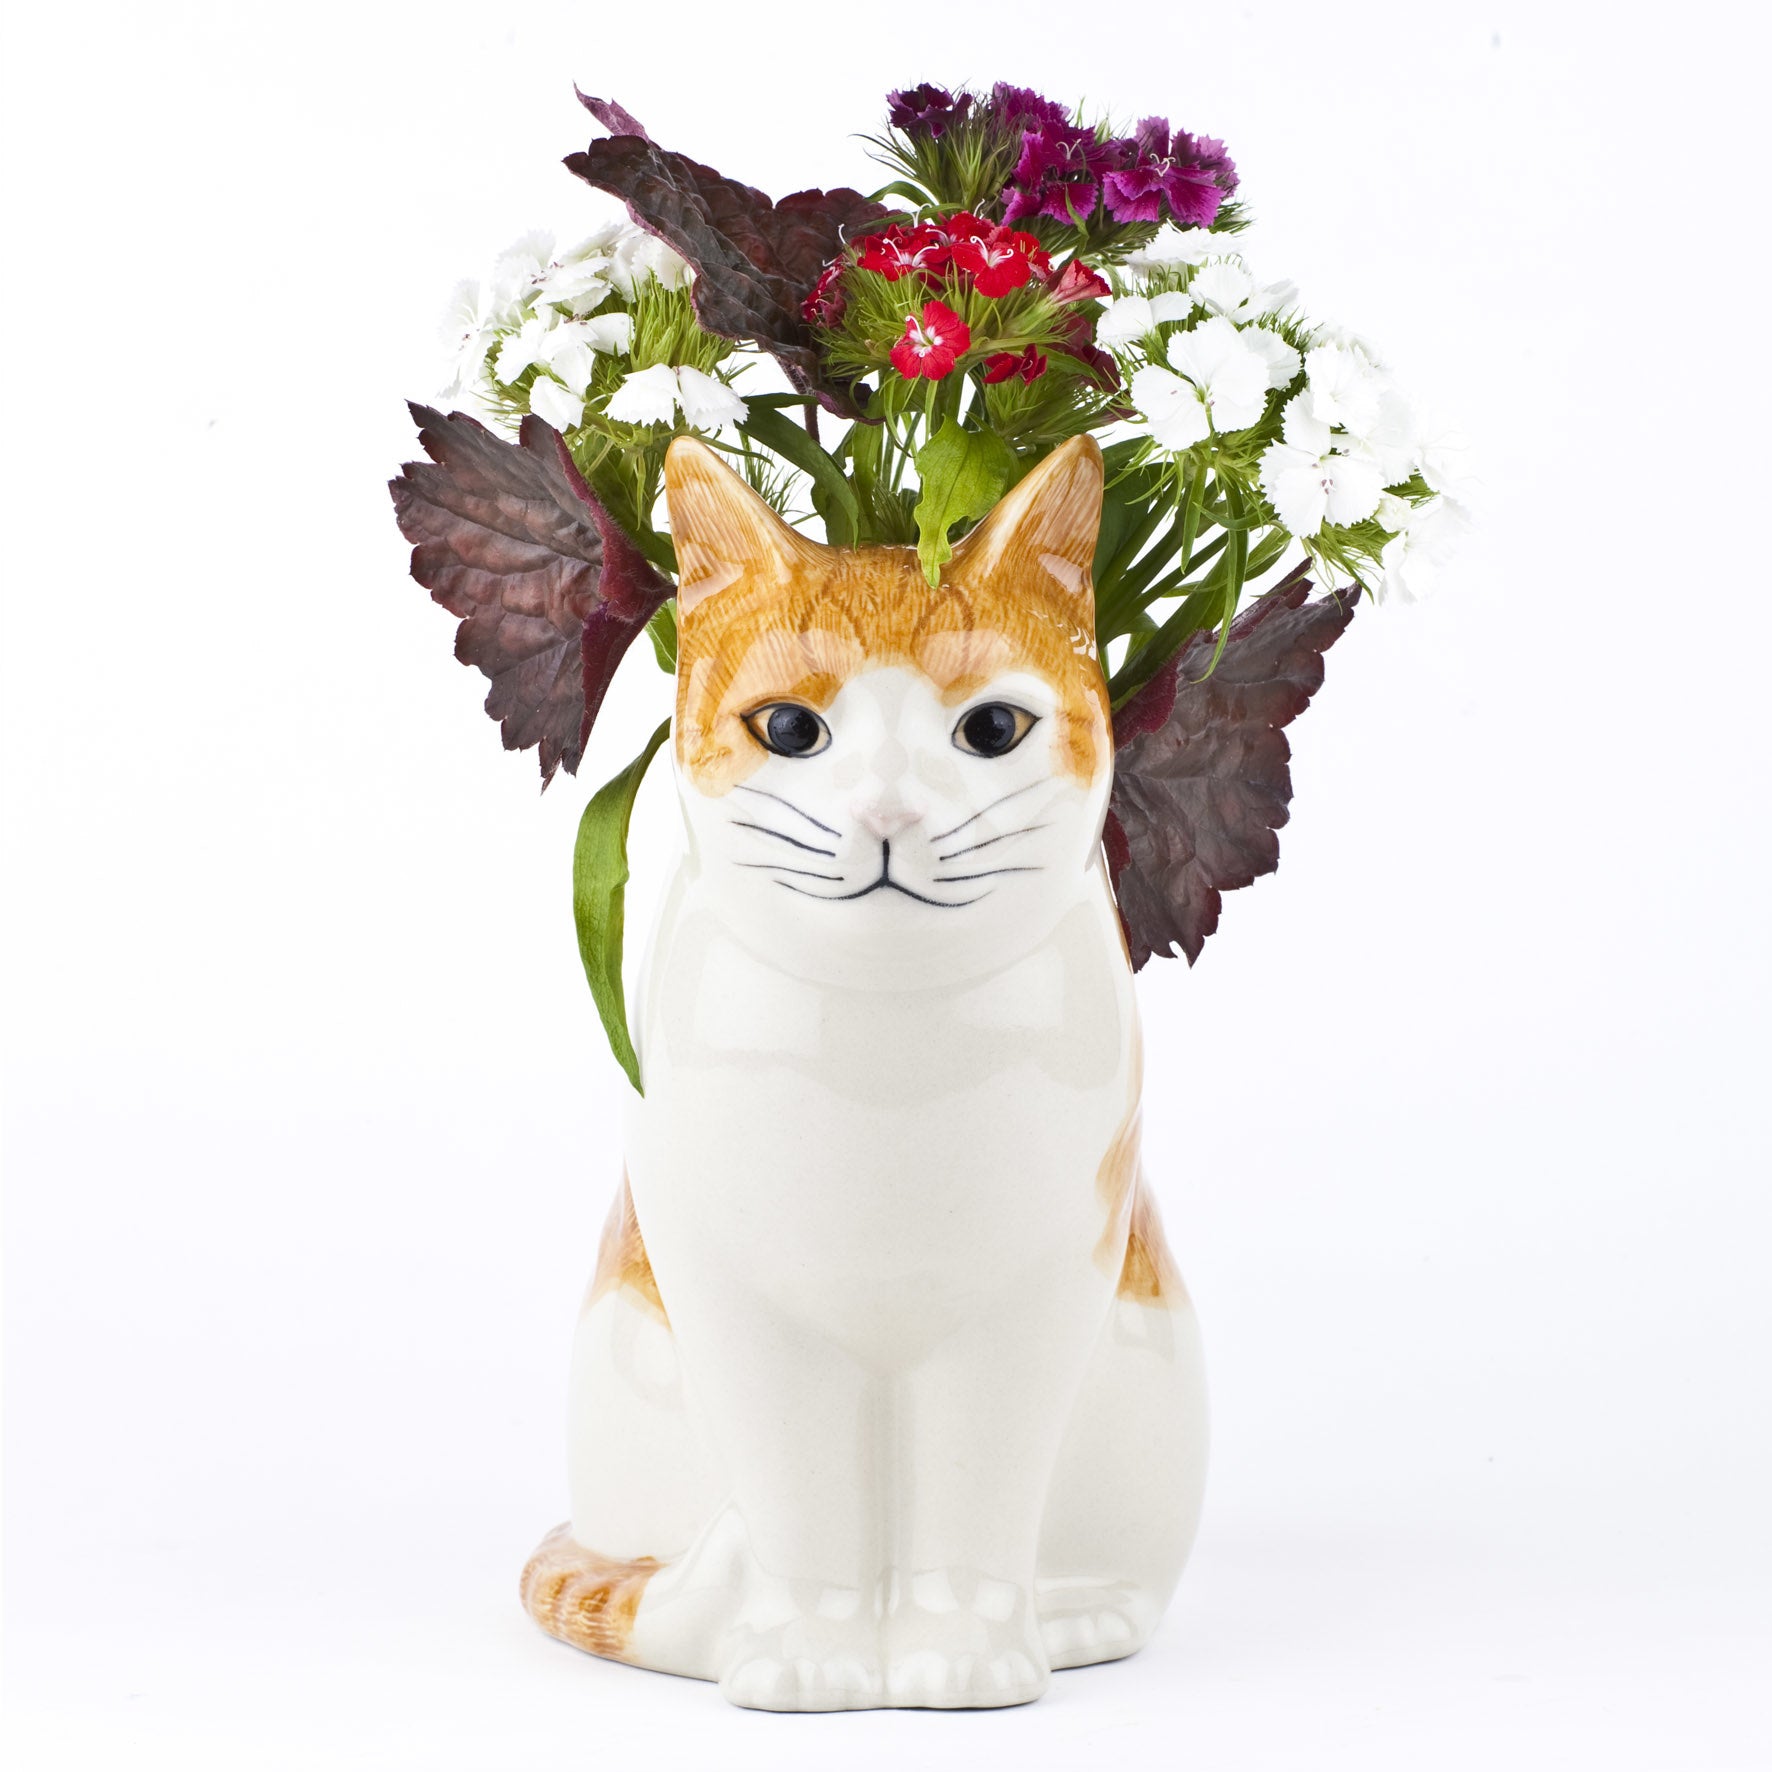 Squash flower vase large 01